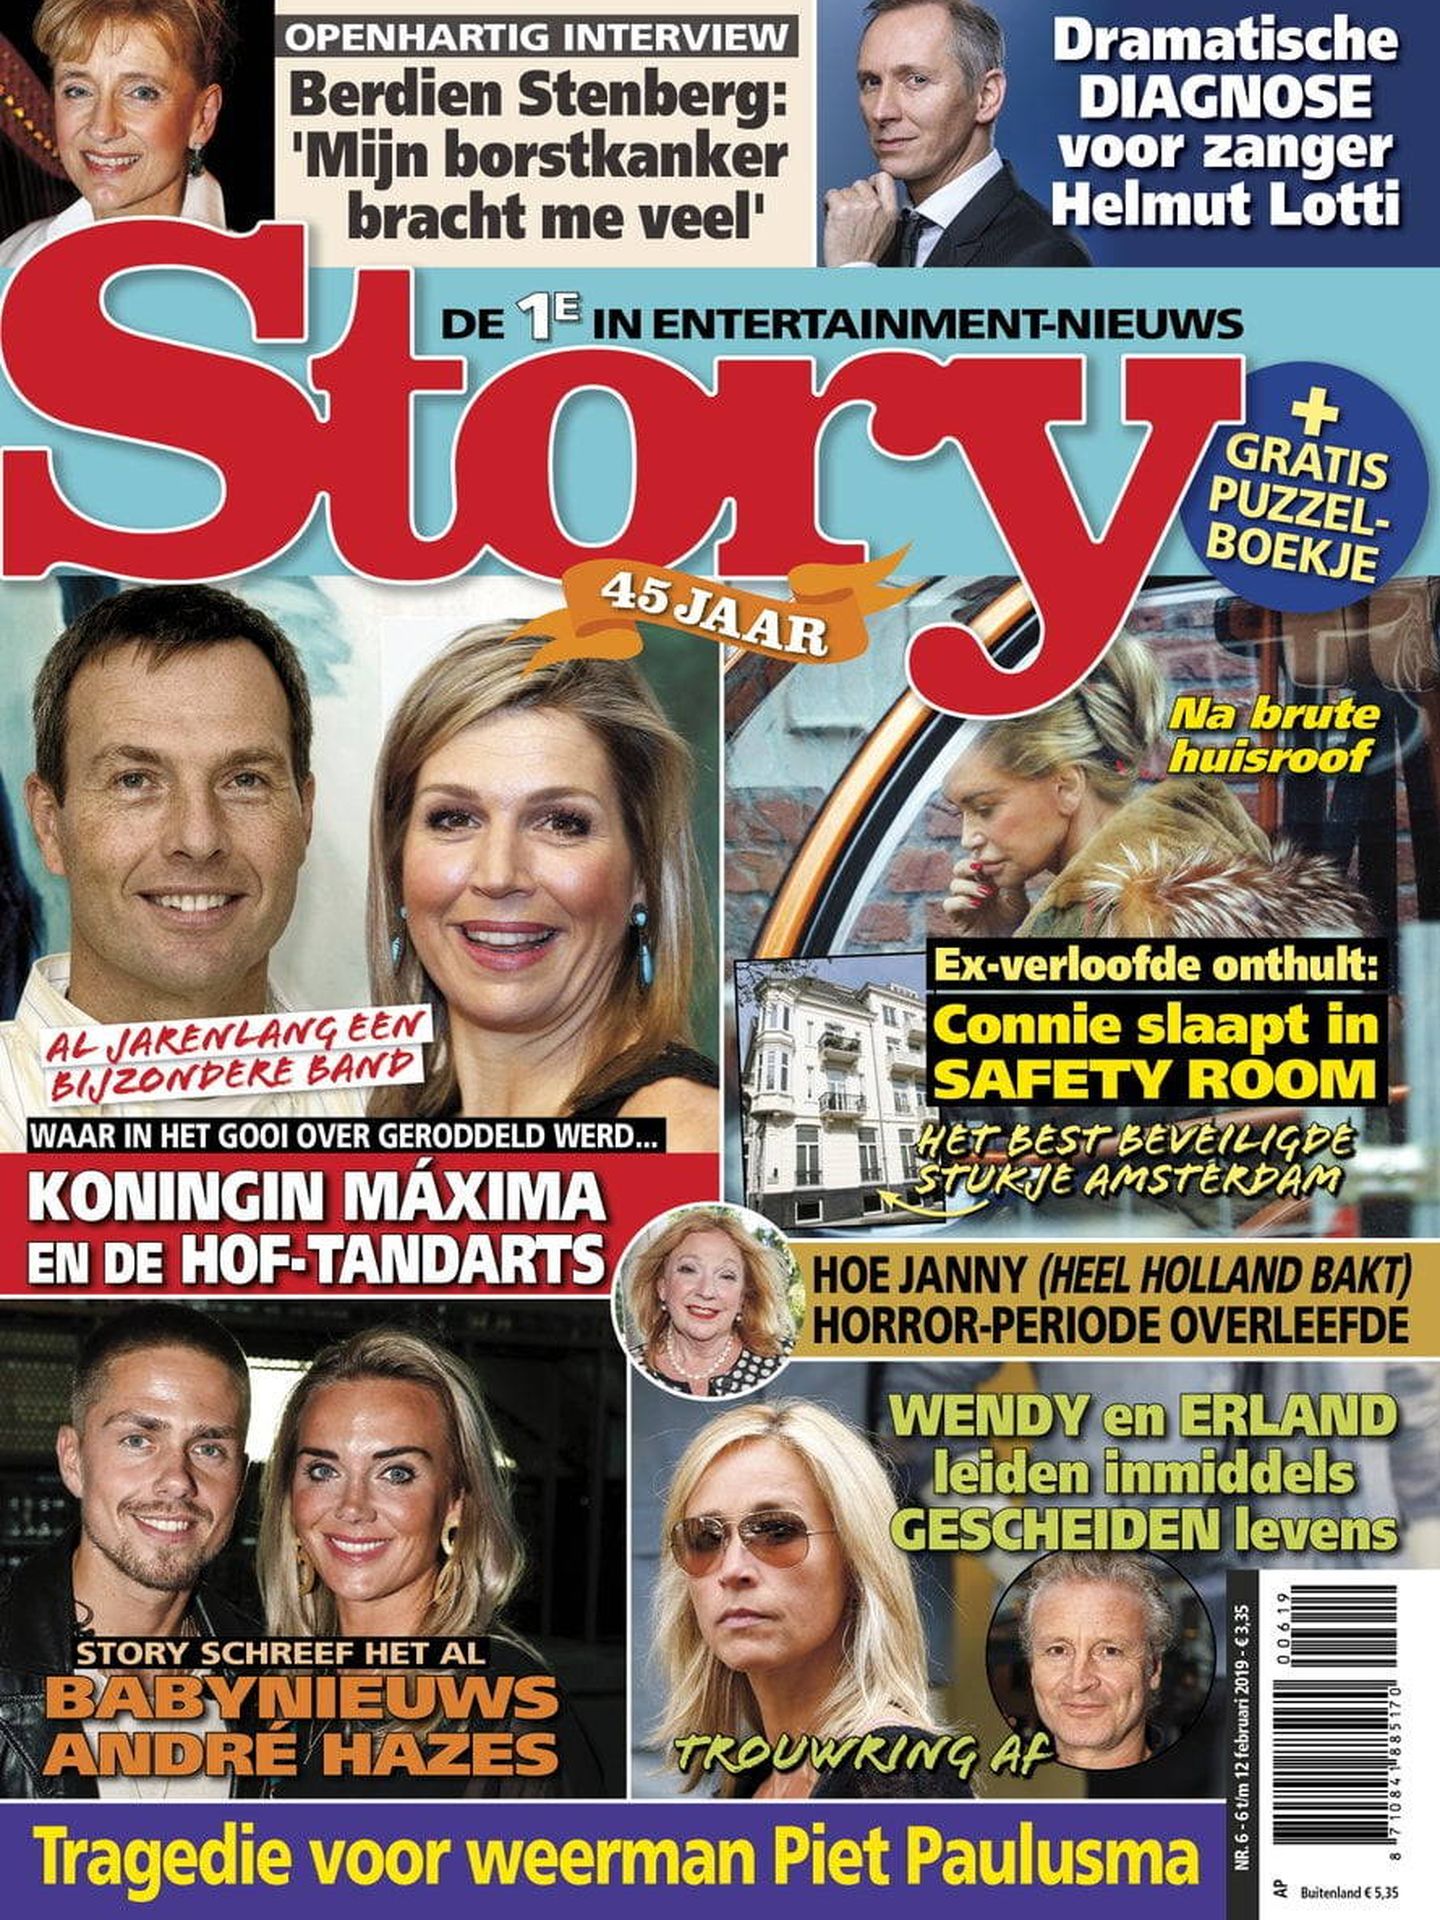 Última portada de la revista holandesa 'Story'. 